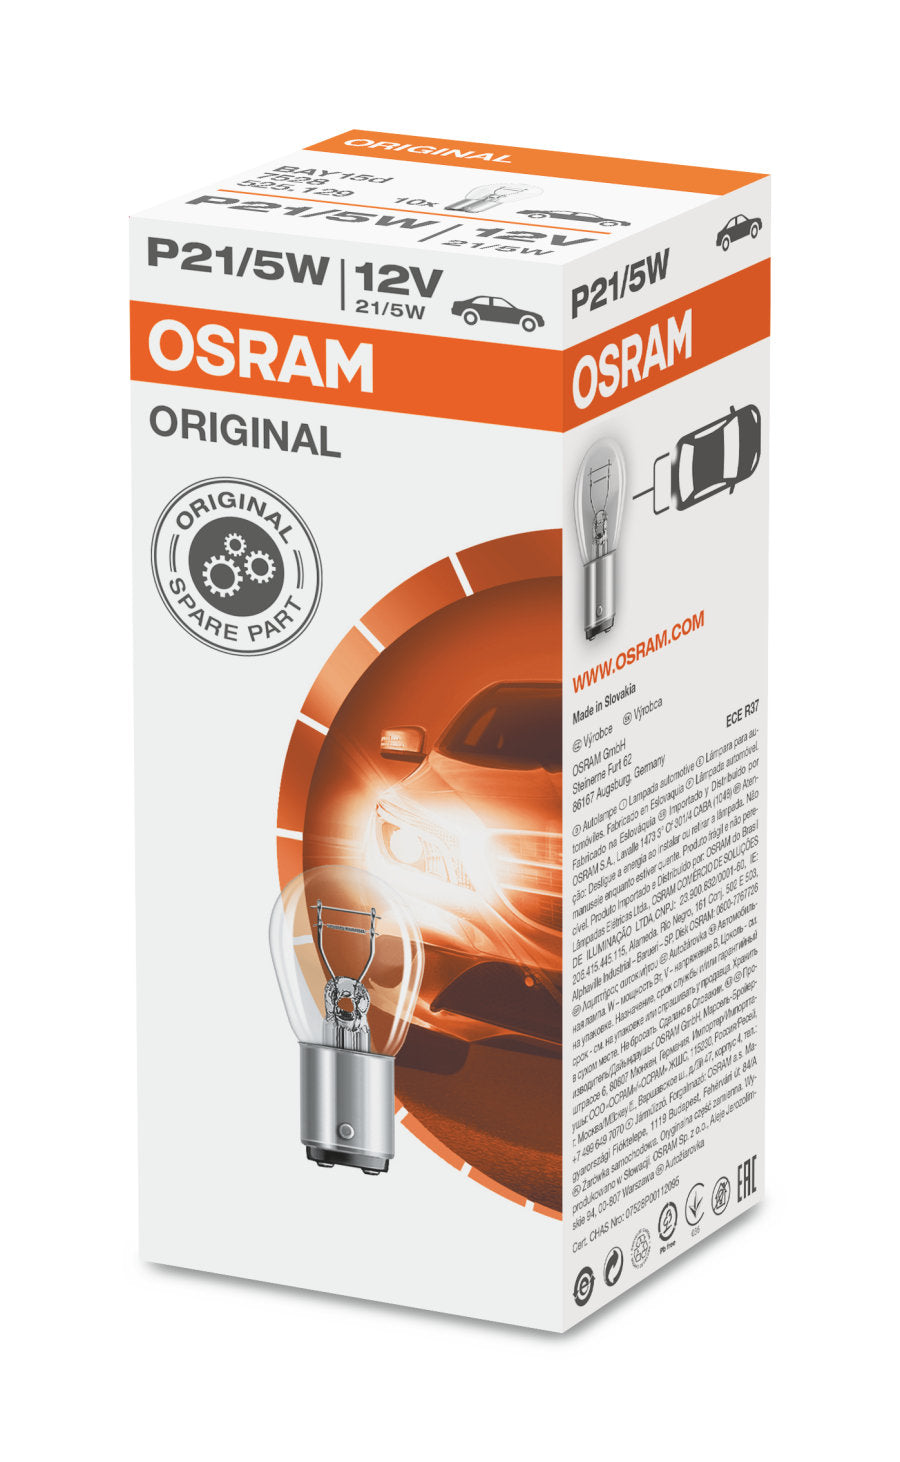 380 Osram Original 12V P21/5W Brake & Tail Light Bulbs (Box of 10)